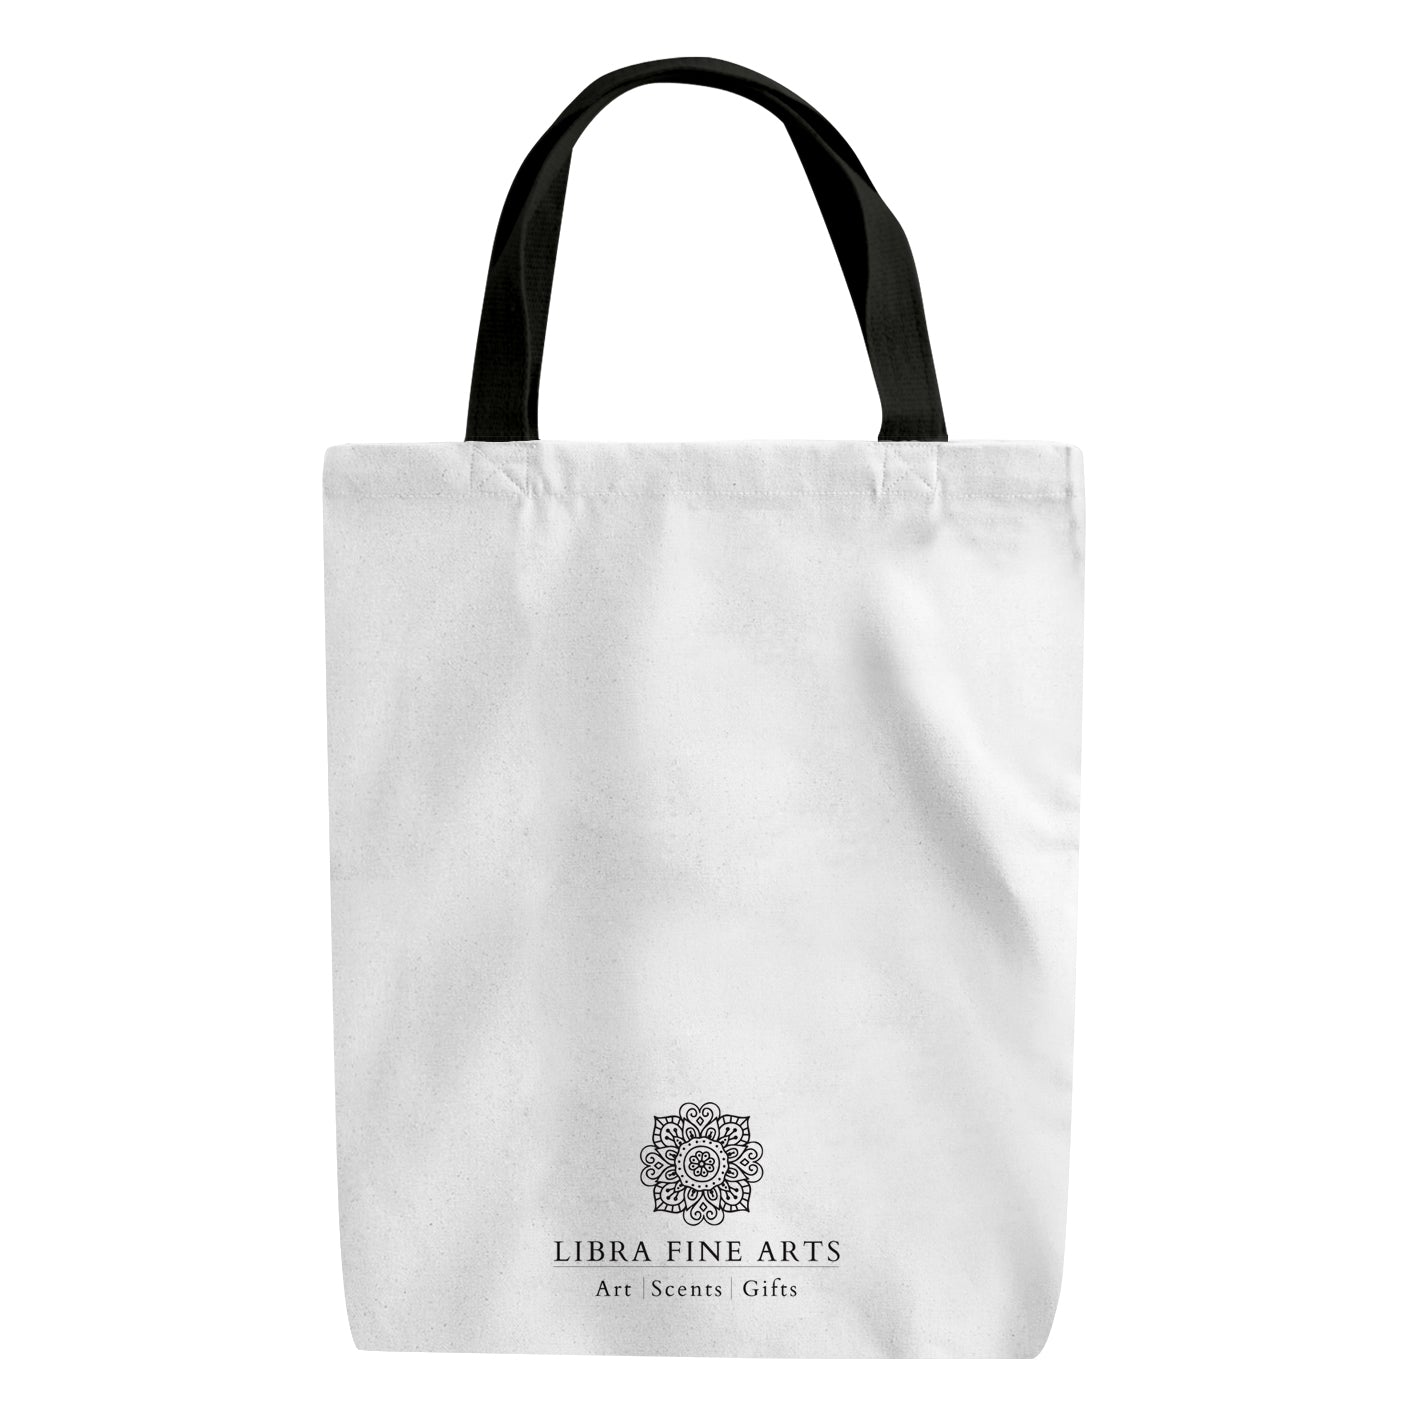 Bunny Shopper Bag From Libra Fine Arts